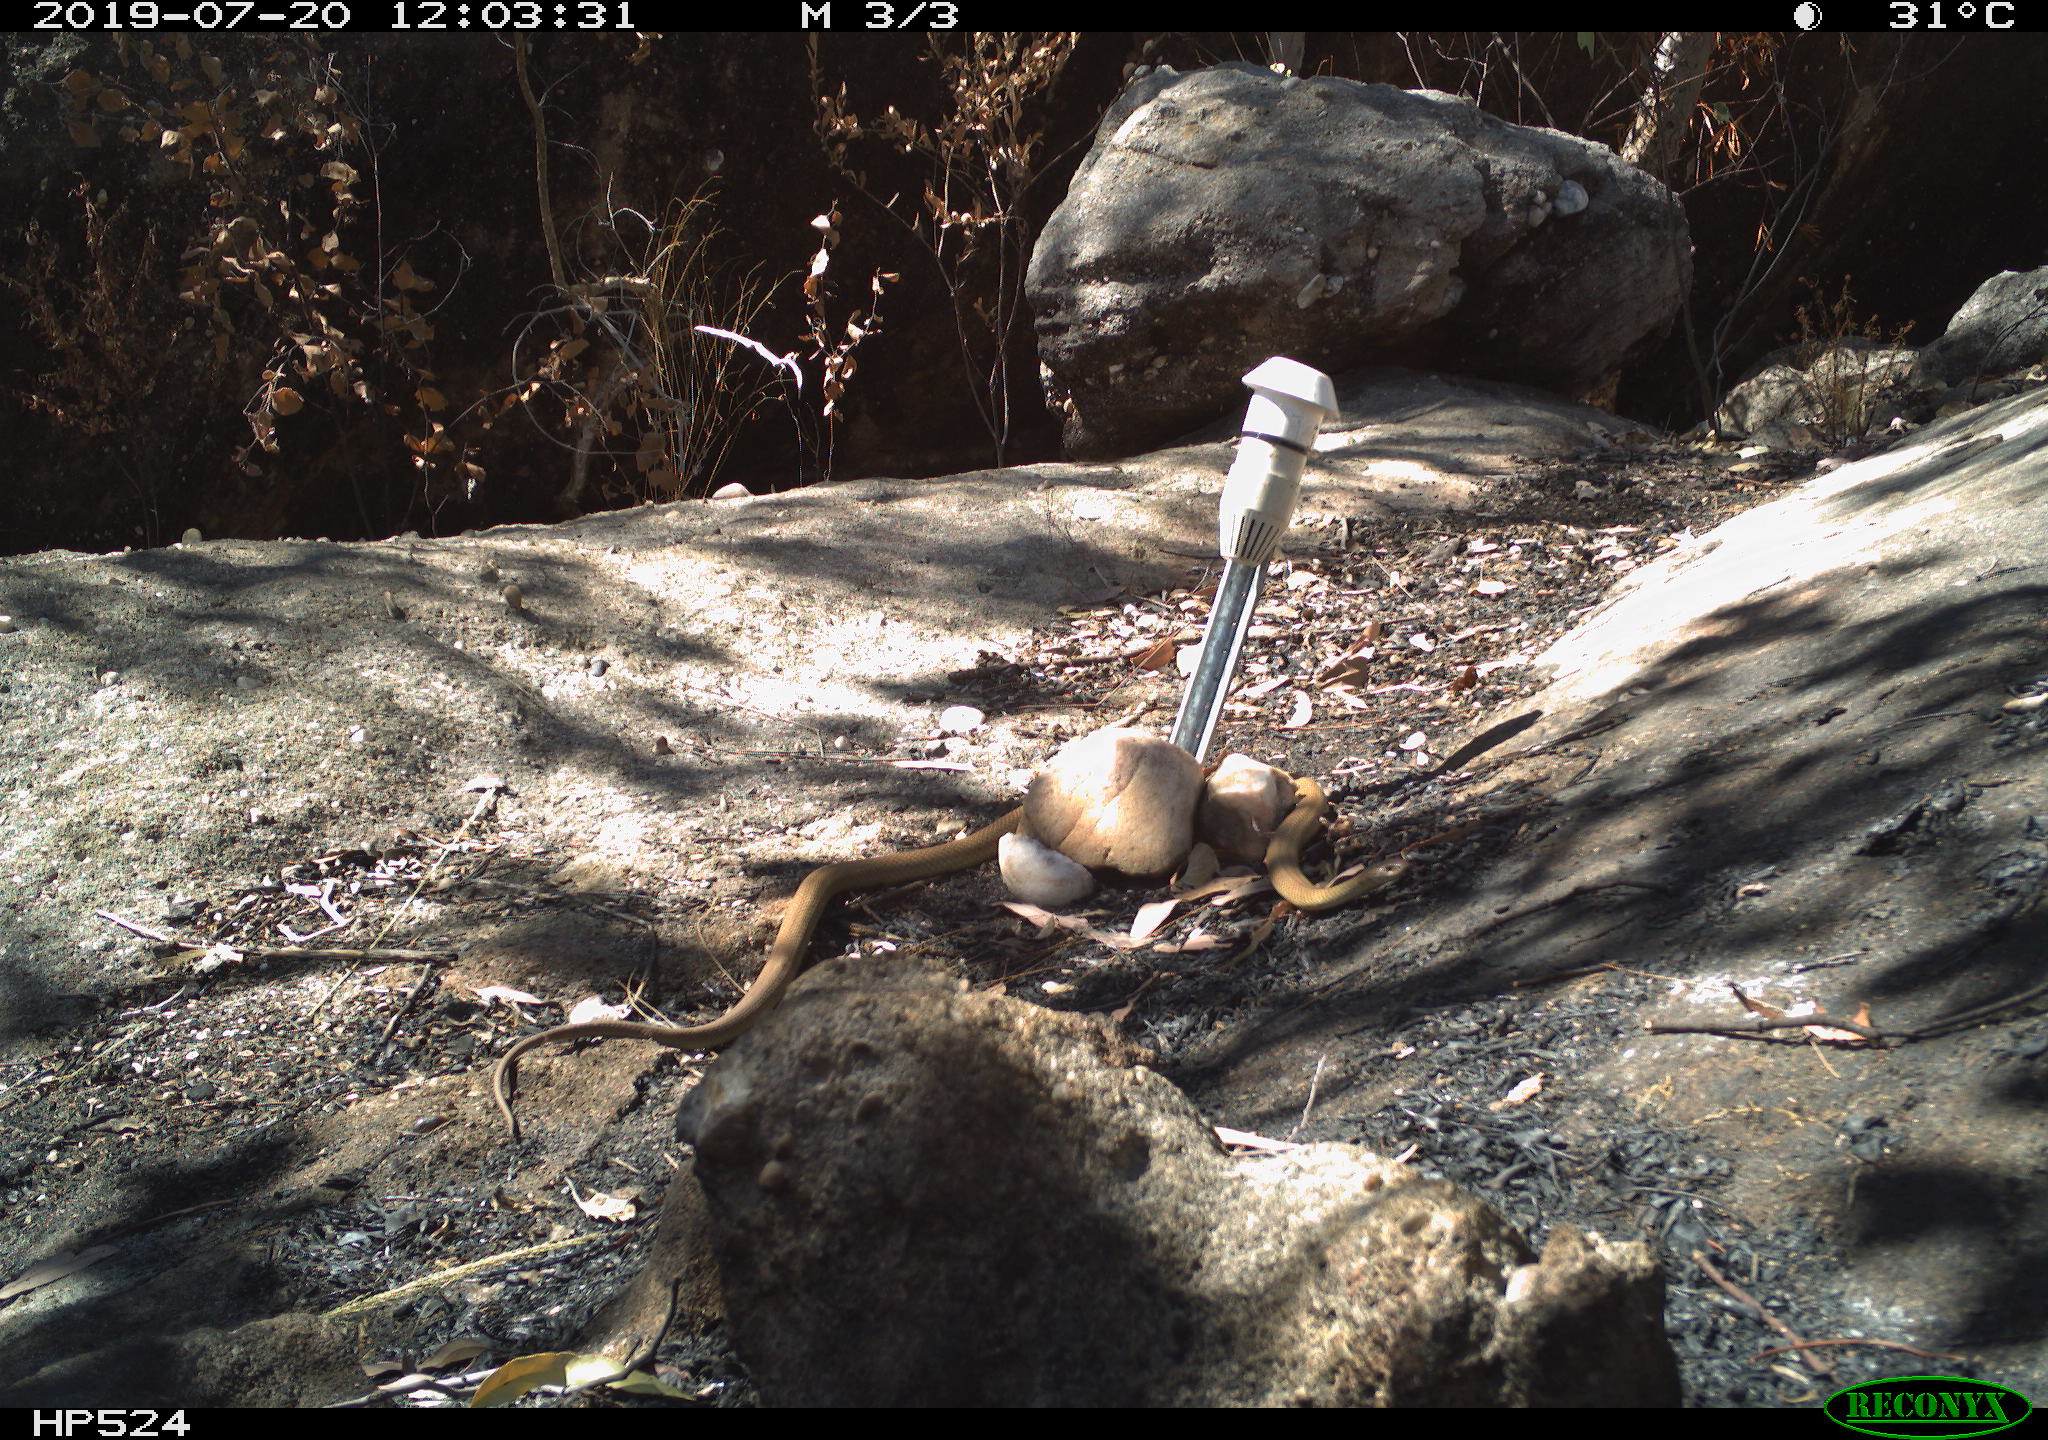 Snake in dappled shadows underneath a camera trap bait